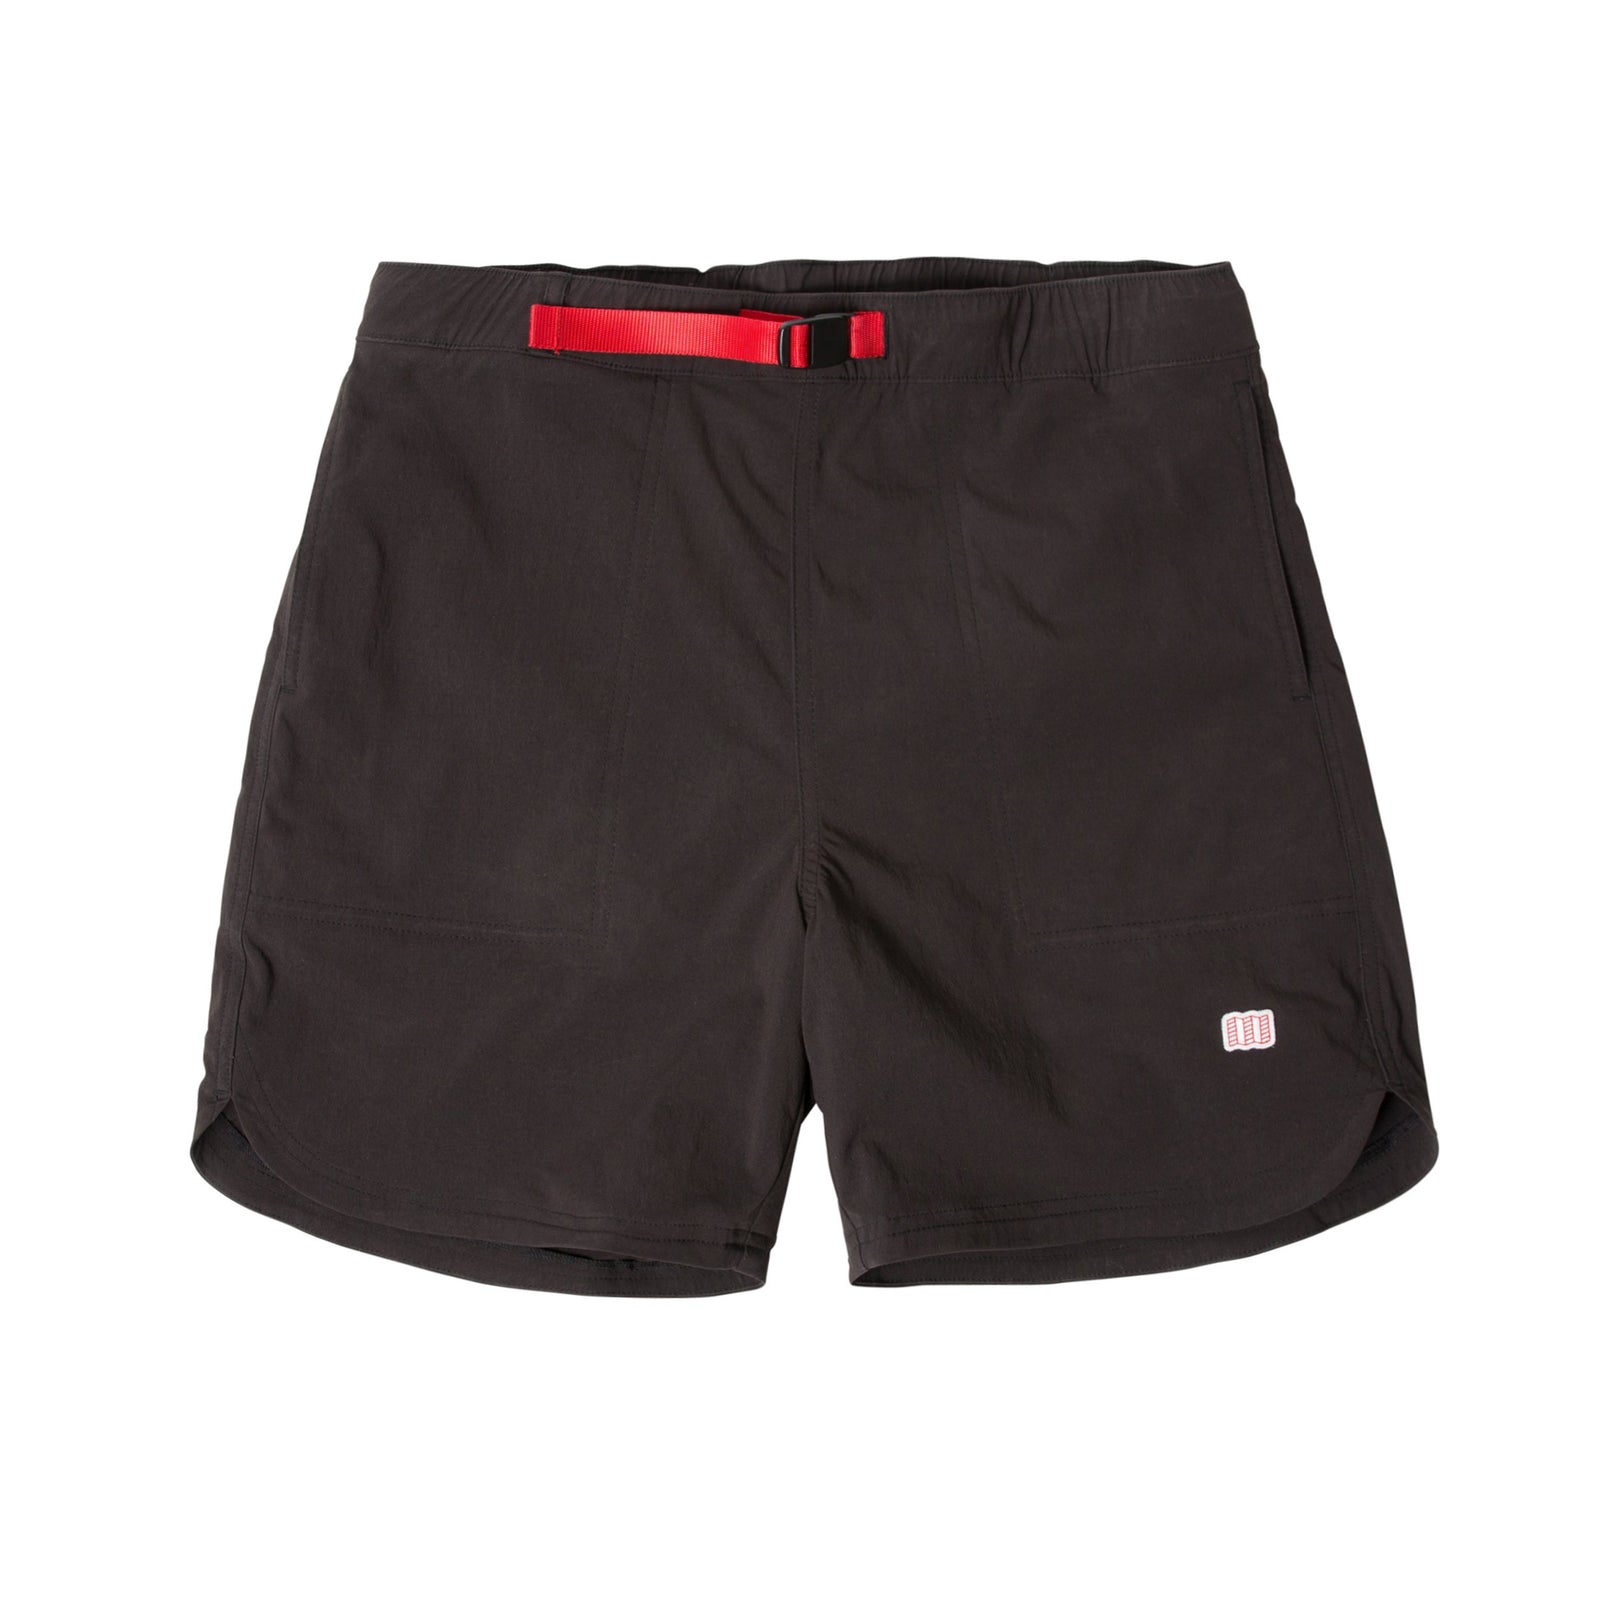 Topo Designs Men's River quick-dry swim Shorts in "Black".